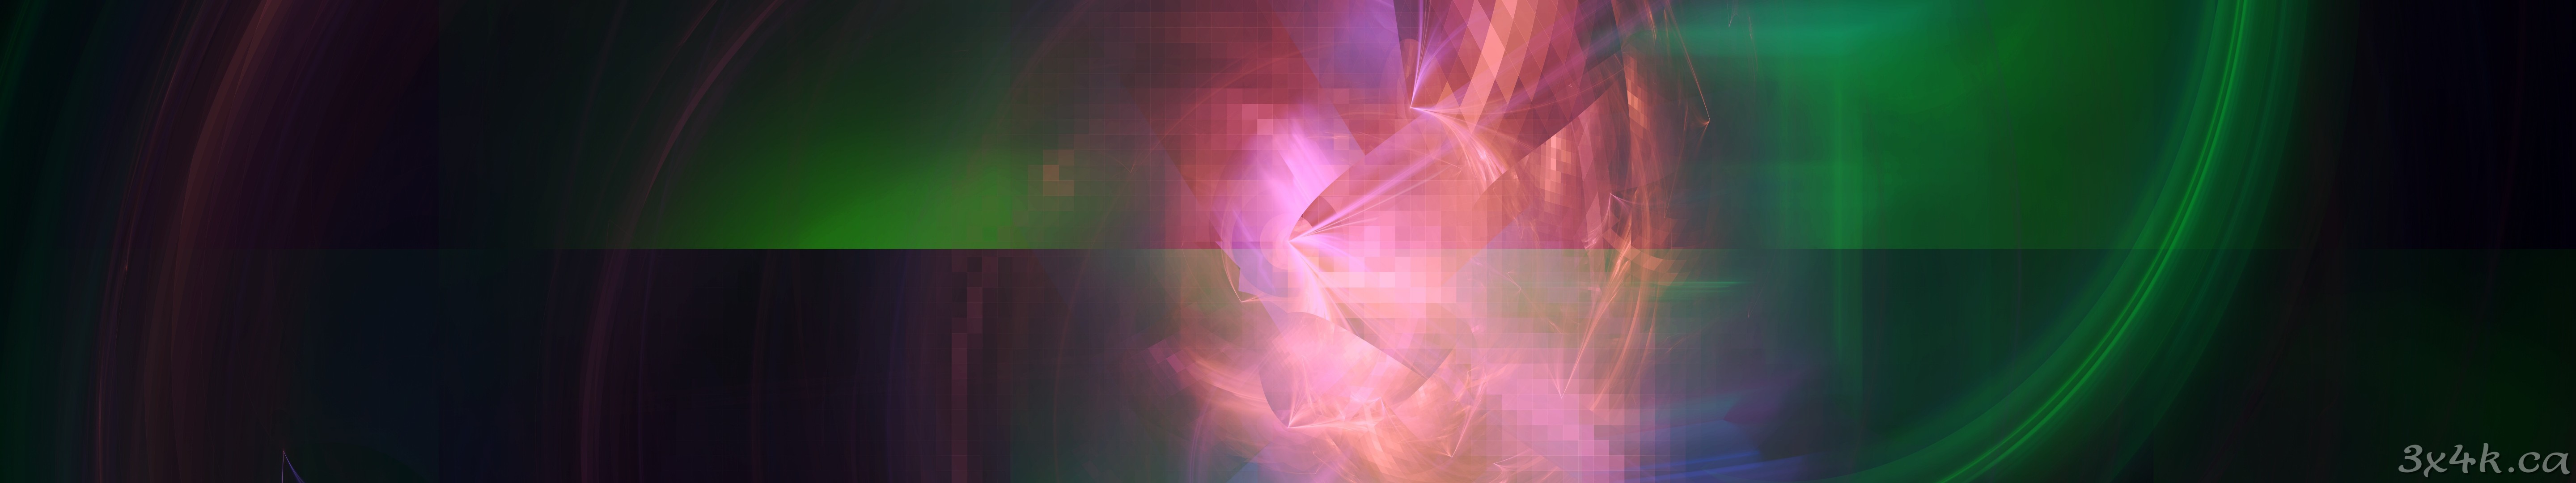 swirl-faber_w-checks-excinis-blur_pixelize.jpg